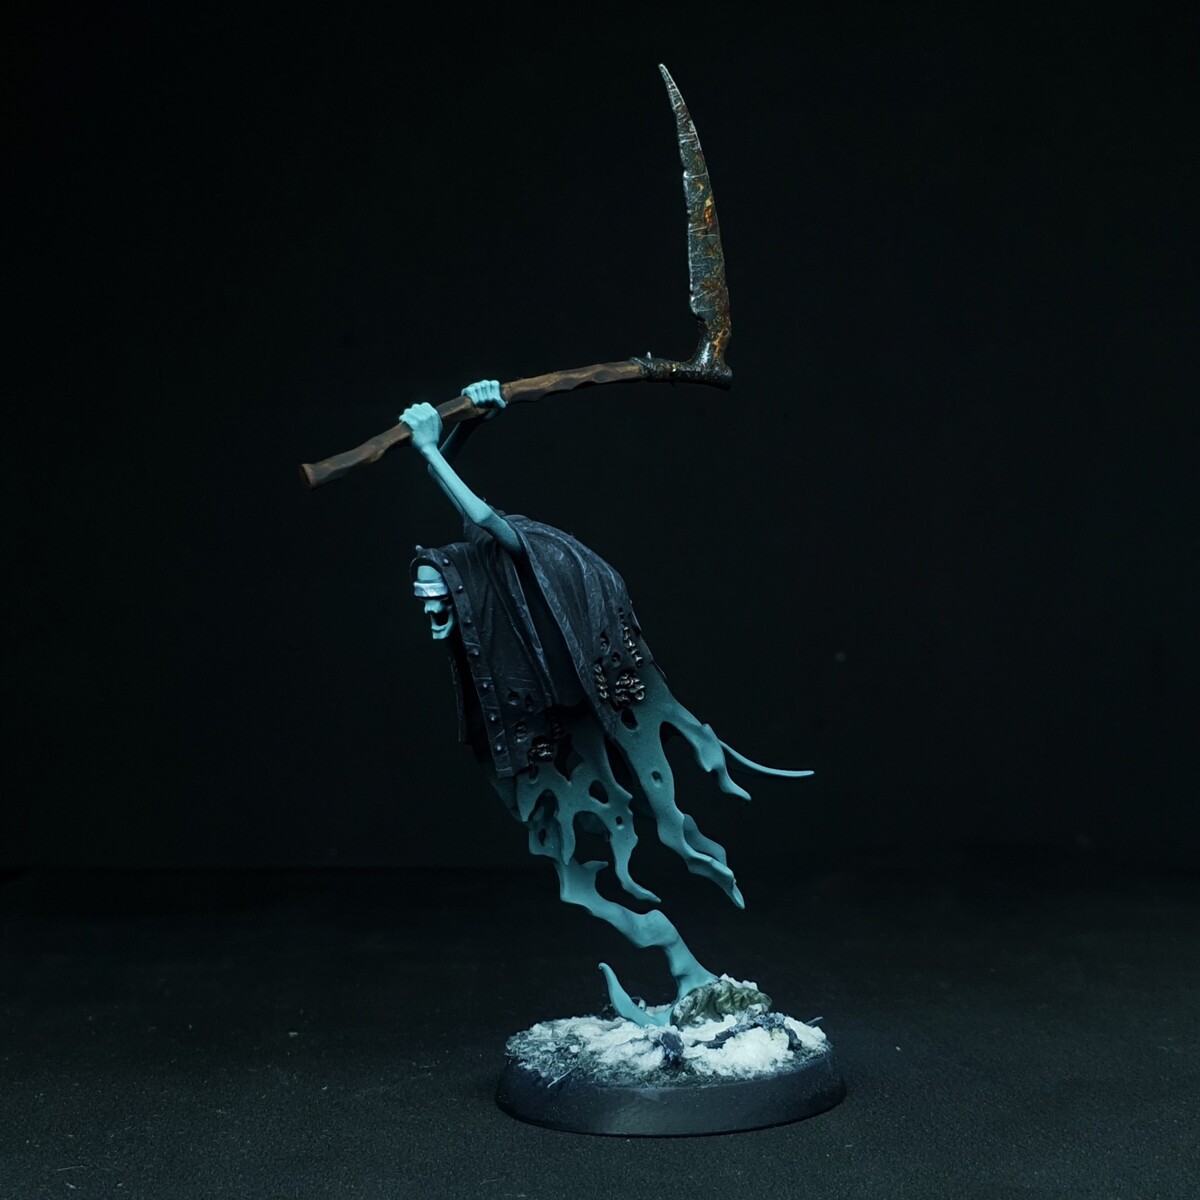 Nighthaunt - Grimghast Reapers